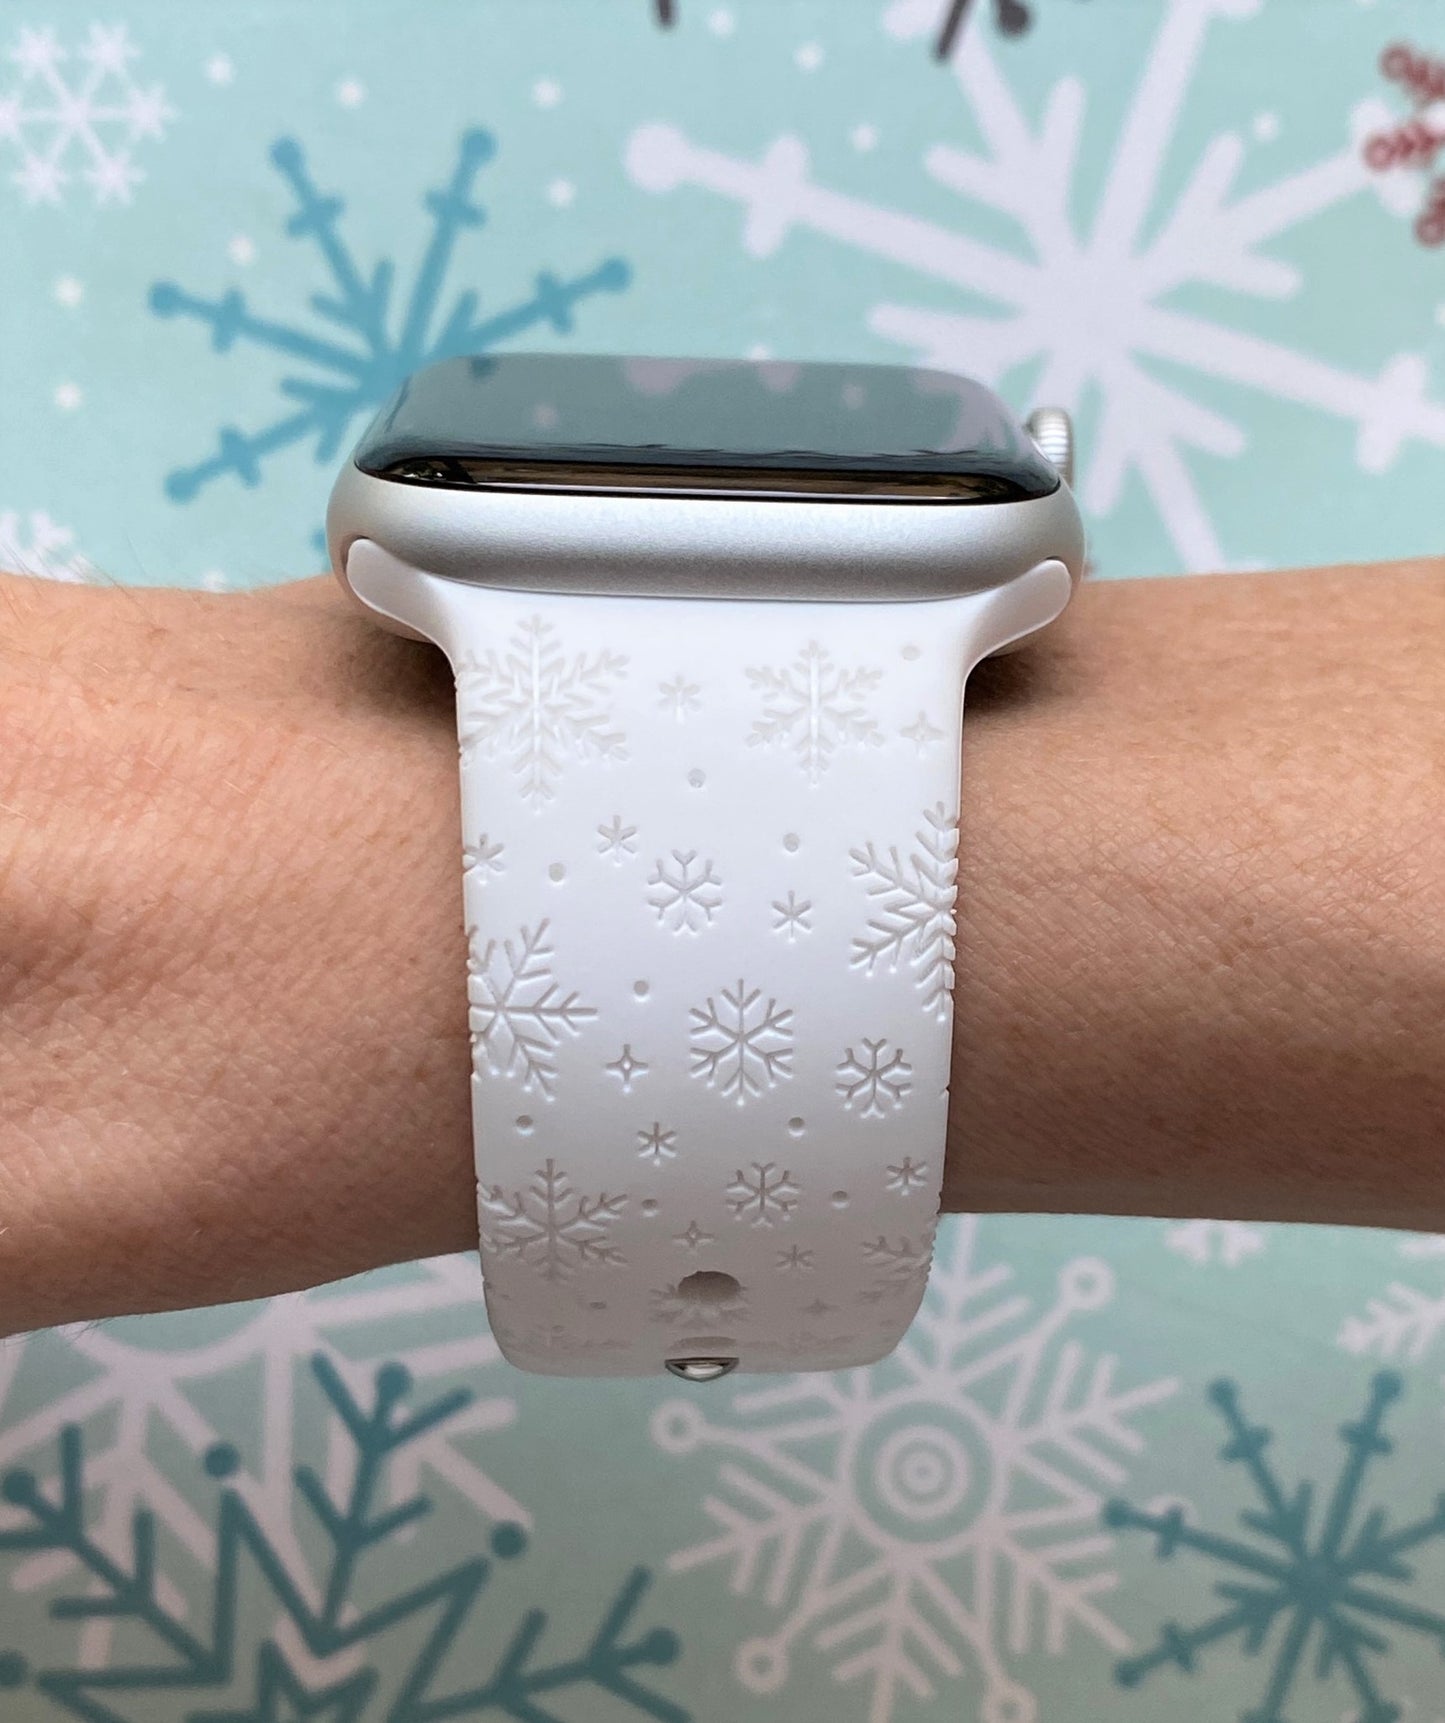 White Snowflake Apple Watch Band